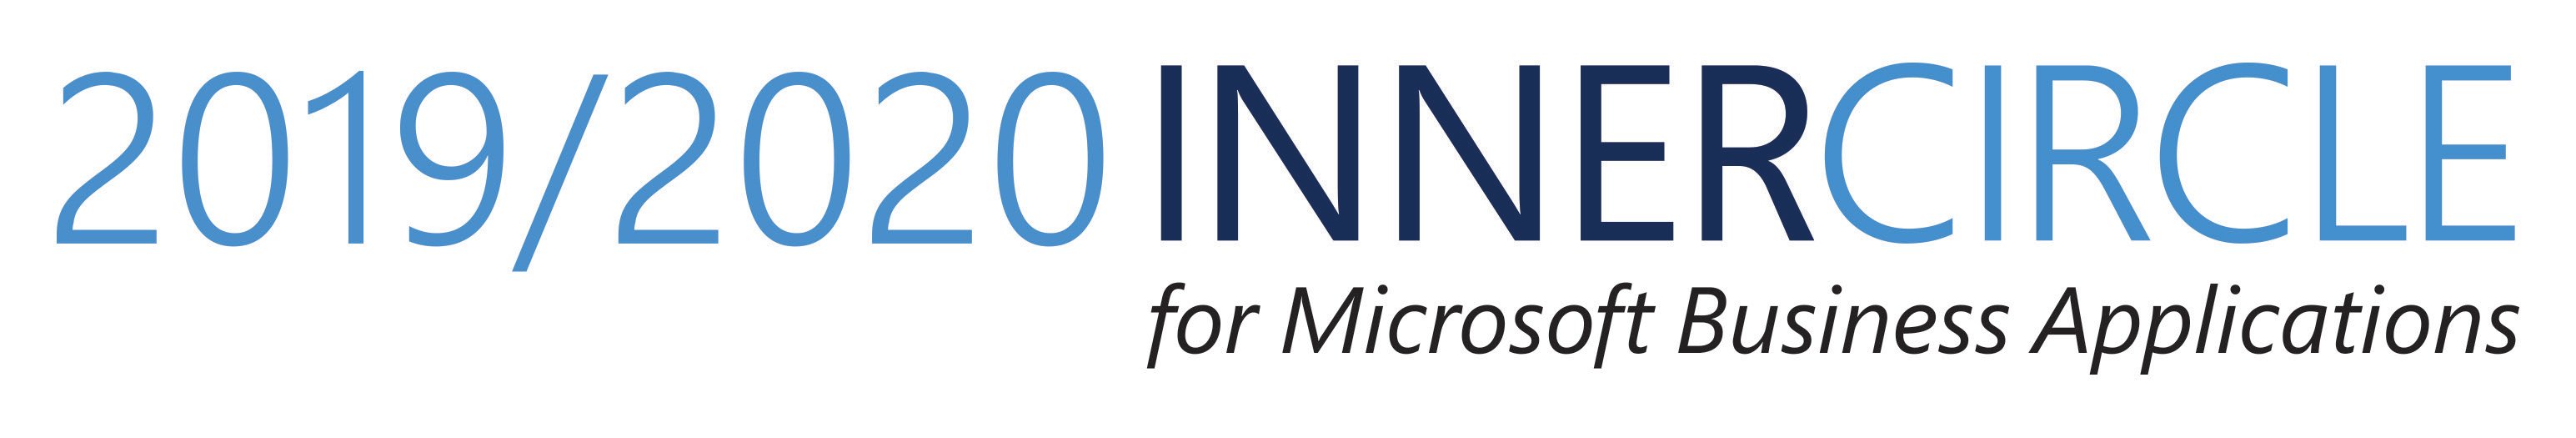 Microsoft inner circle logo_july 2019 (002)